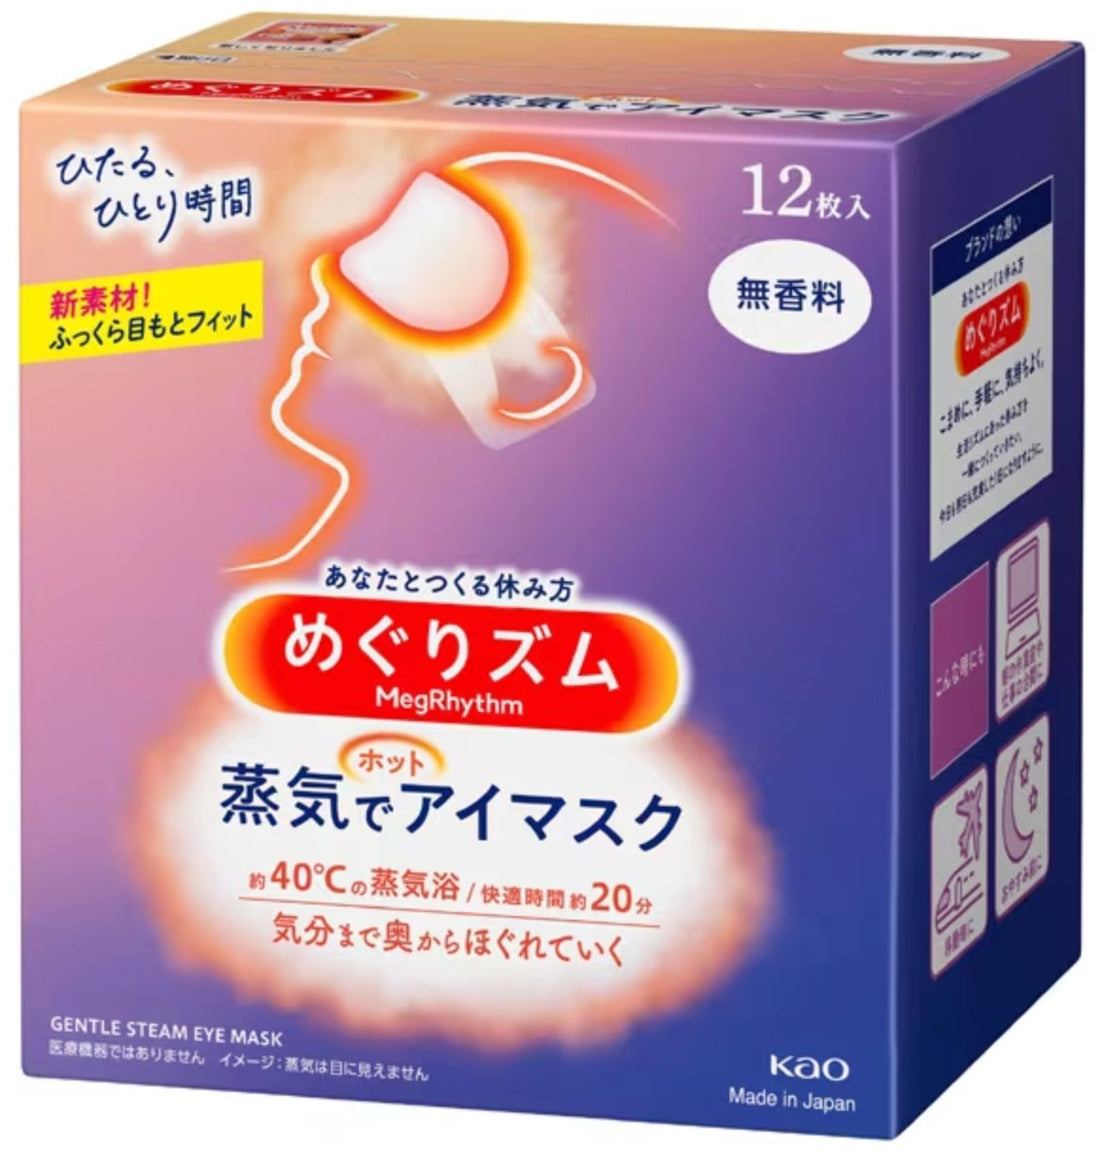 Kao Megrhythm Hot Steam Eye Mask 12 sheets - No Flavor - NihonMura